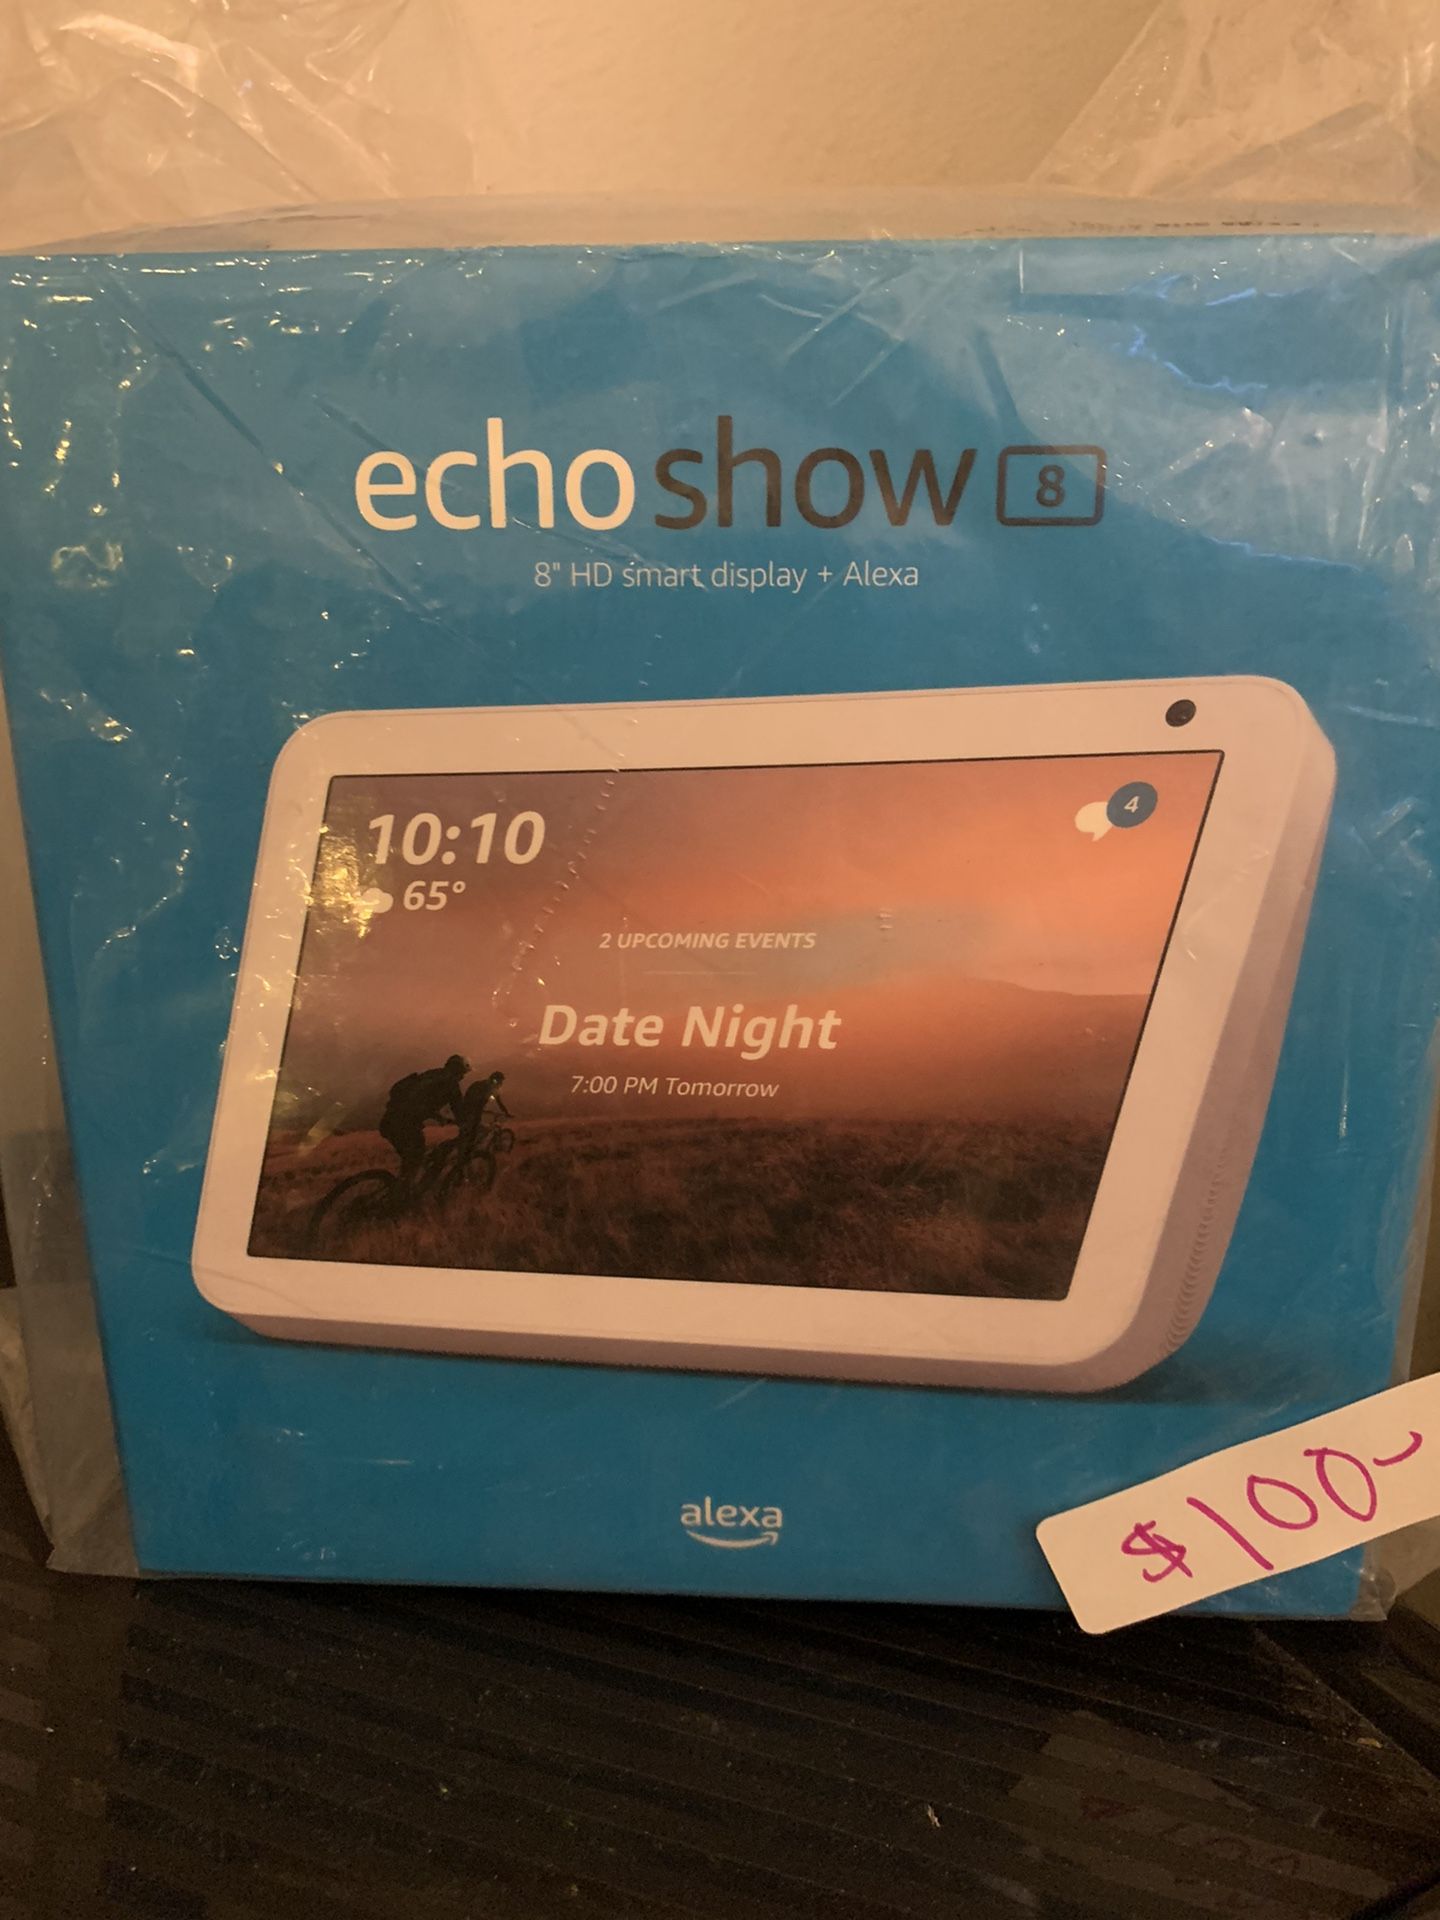 * NEW IN BOX * NEVER OPENED * - ECHO SHOW 8 - 8” HD SMART DISPLAY + ALEXA